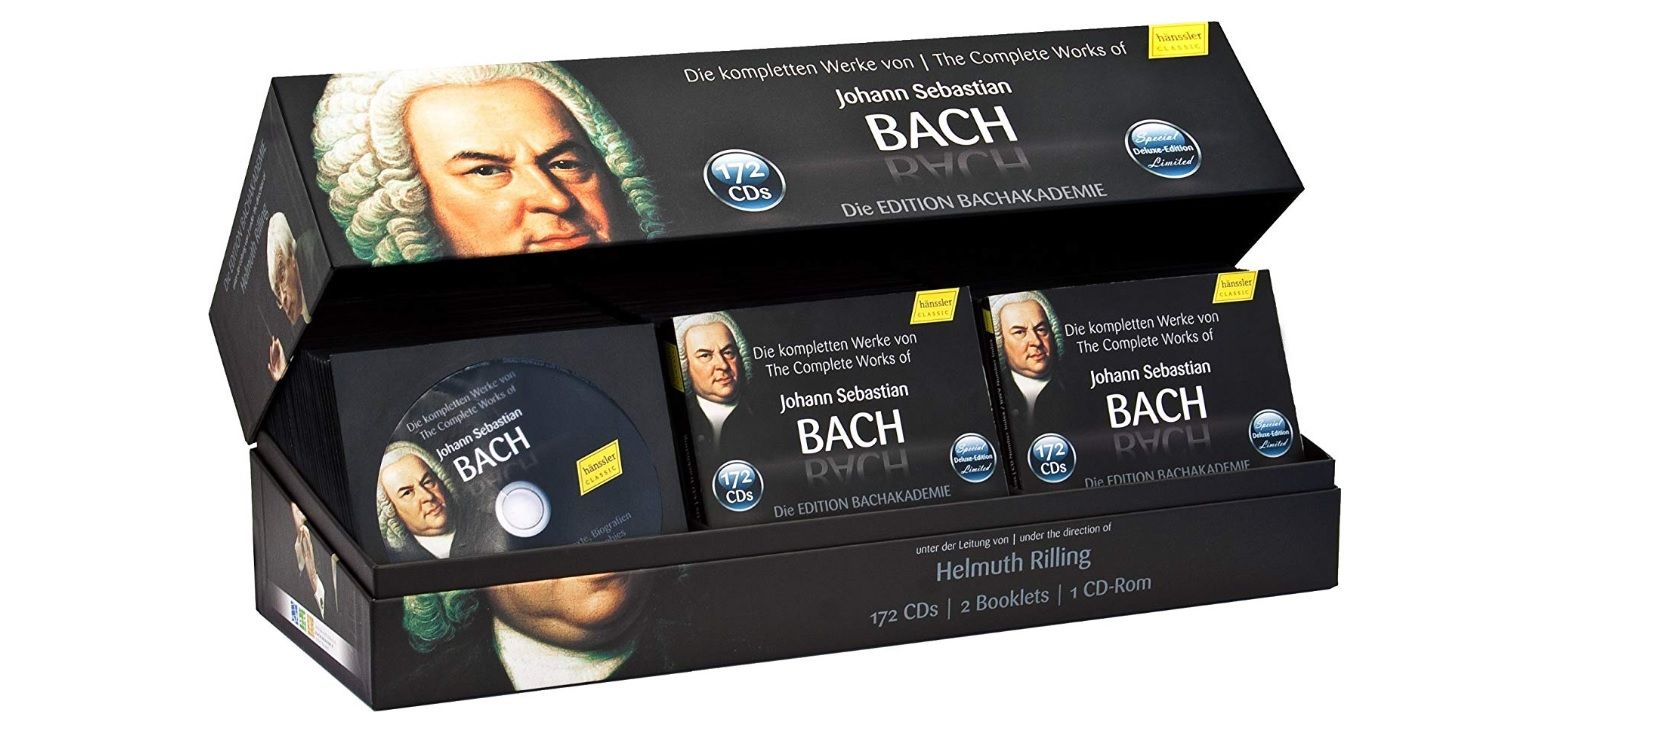 ¡Chollazo! Obra Completa Johann Sebastian Bach por sólo 37,46€ (antes 232,11€)